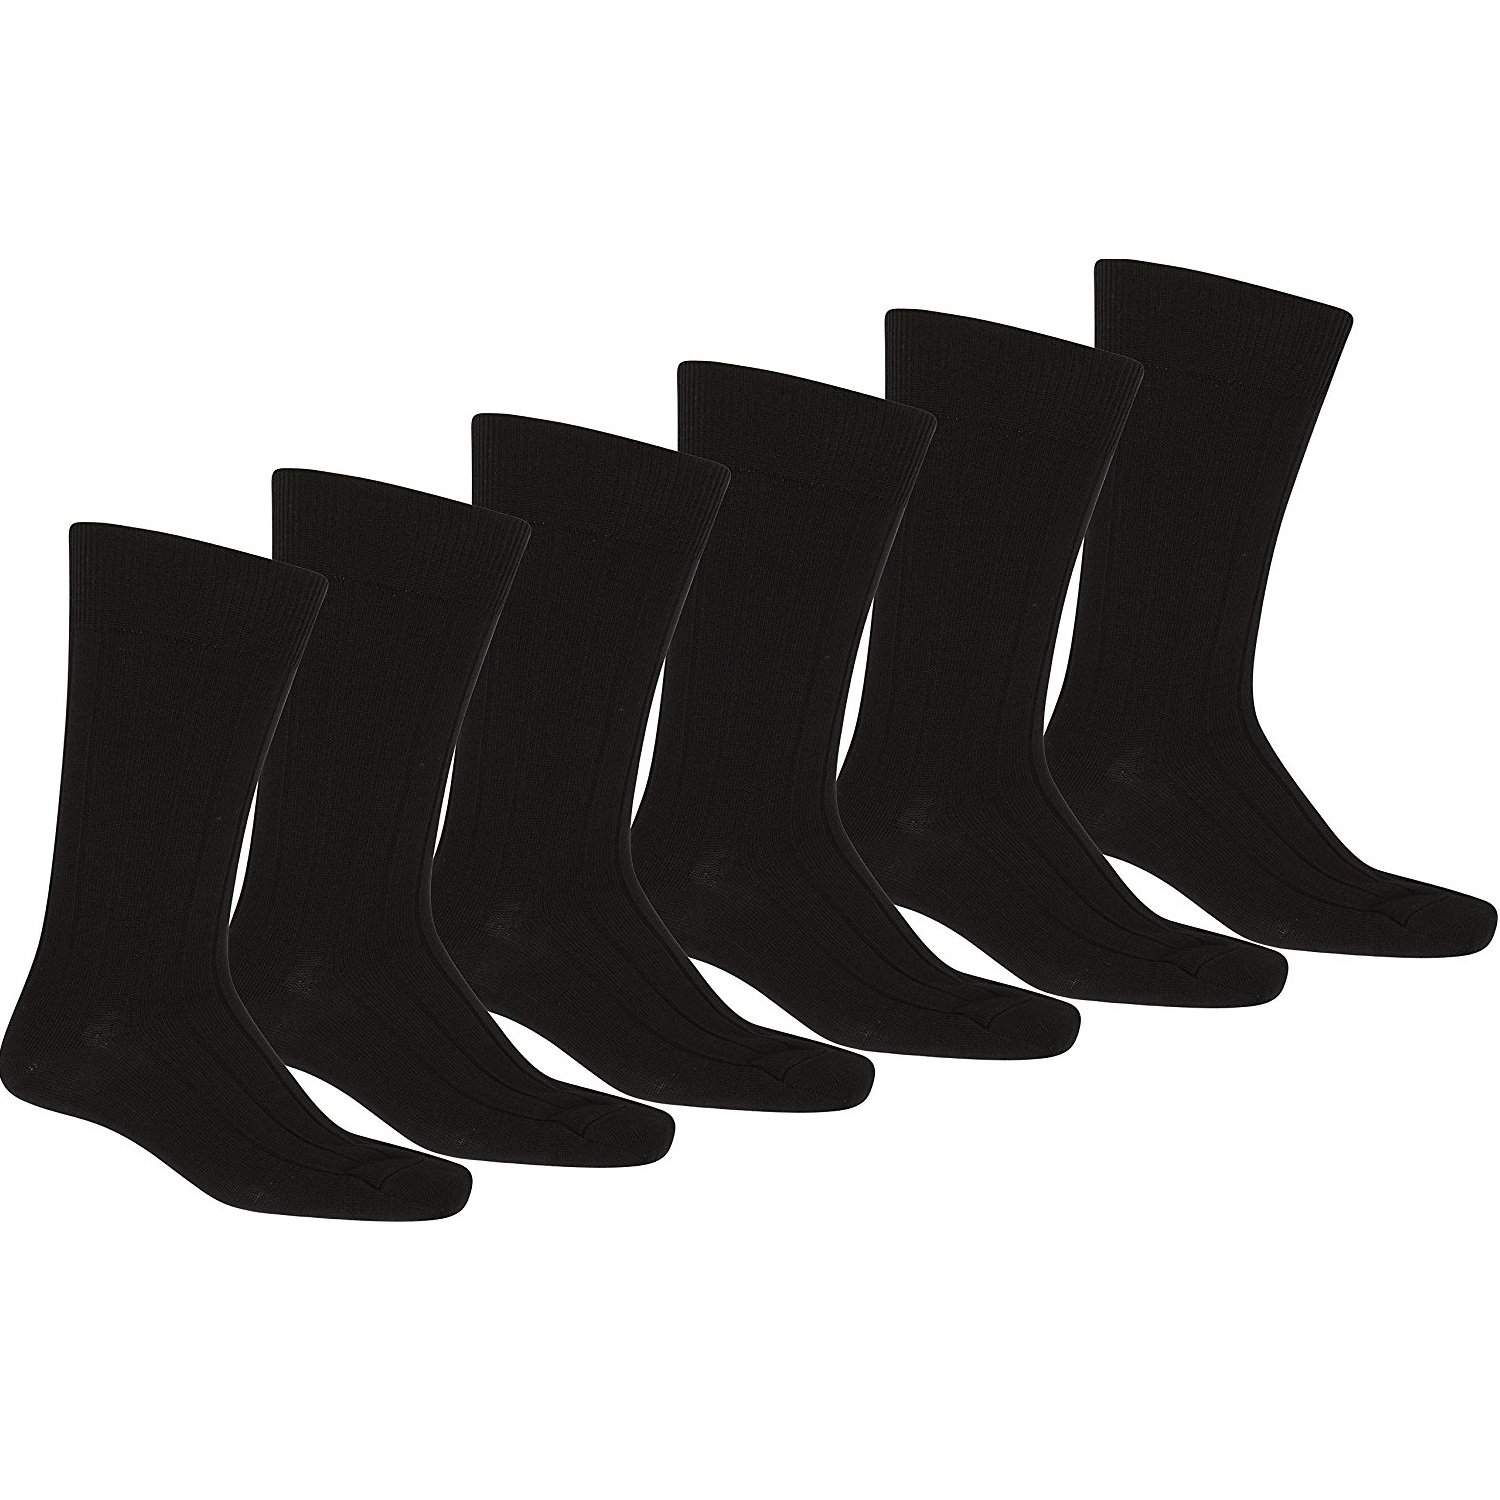 20 Pack of Qraftsy Men Black Solid Plain Dress Socks